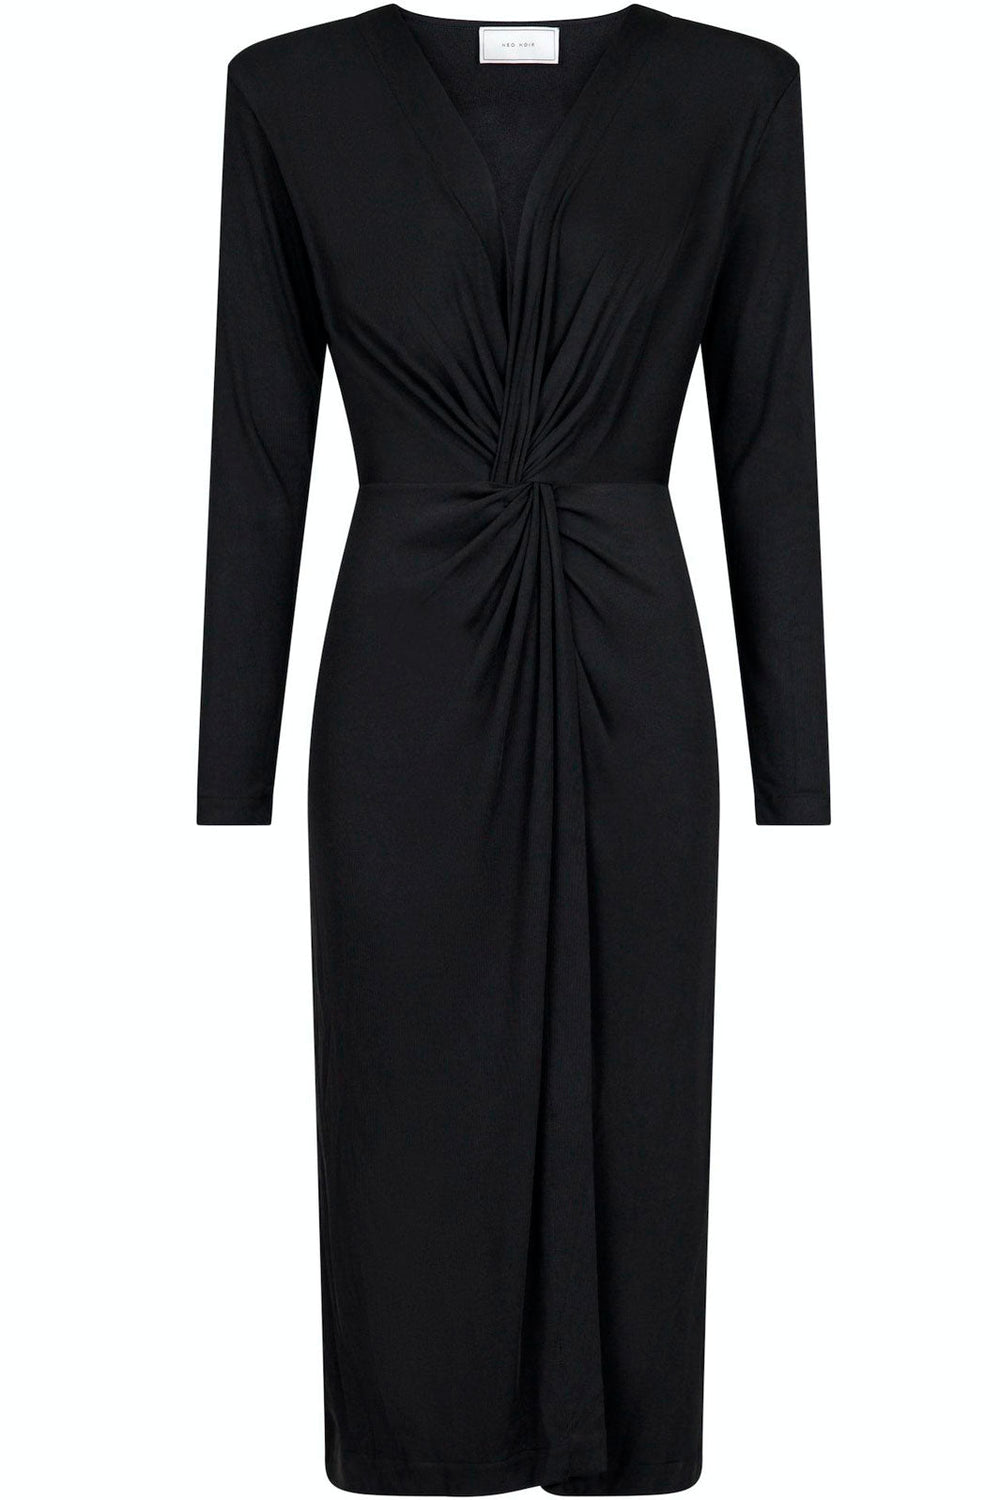 Neo Noir - Ginnie Dress - Black Kjoler 